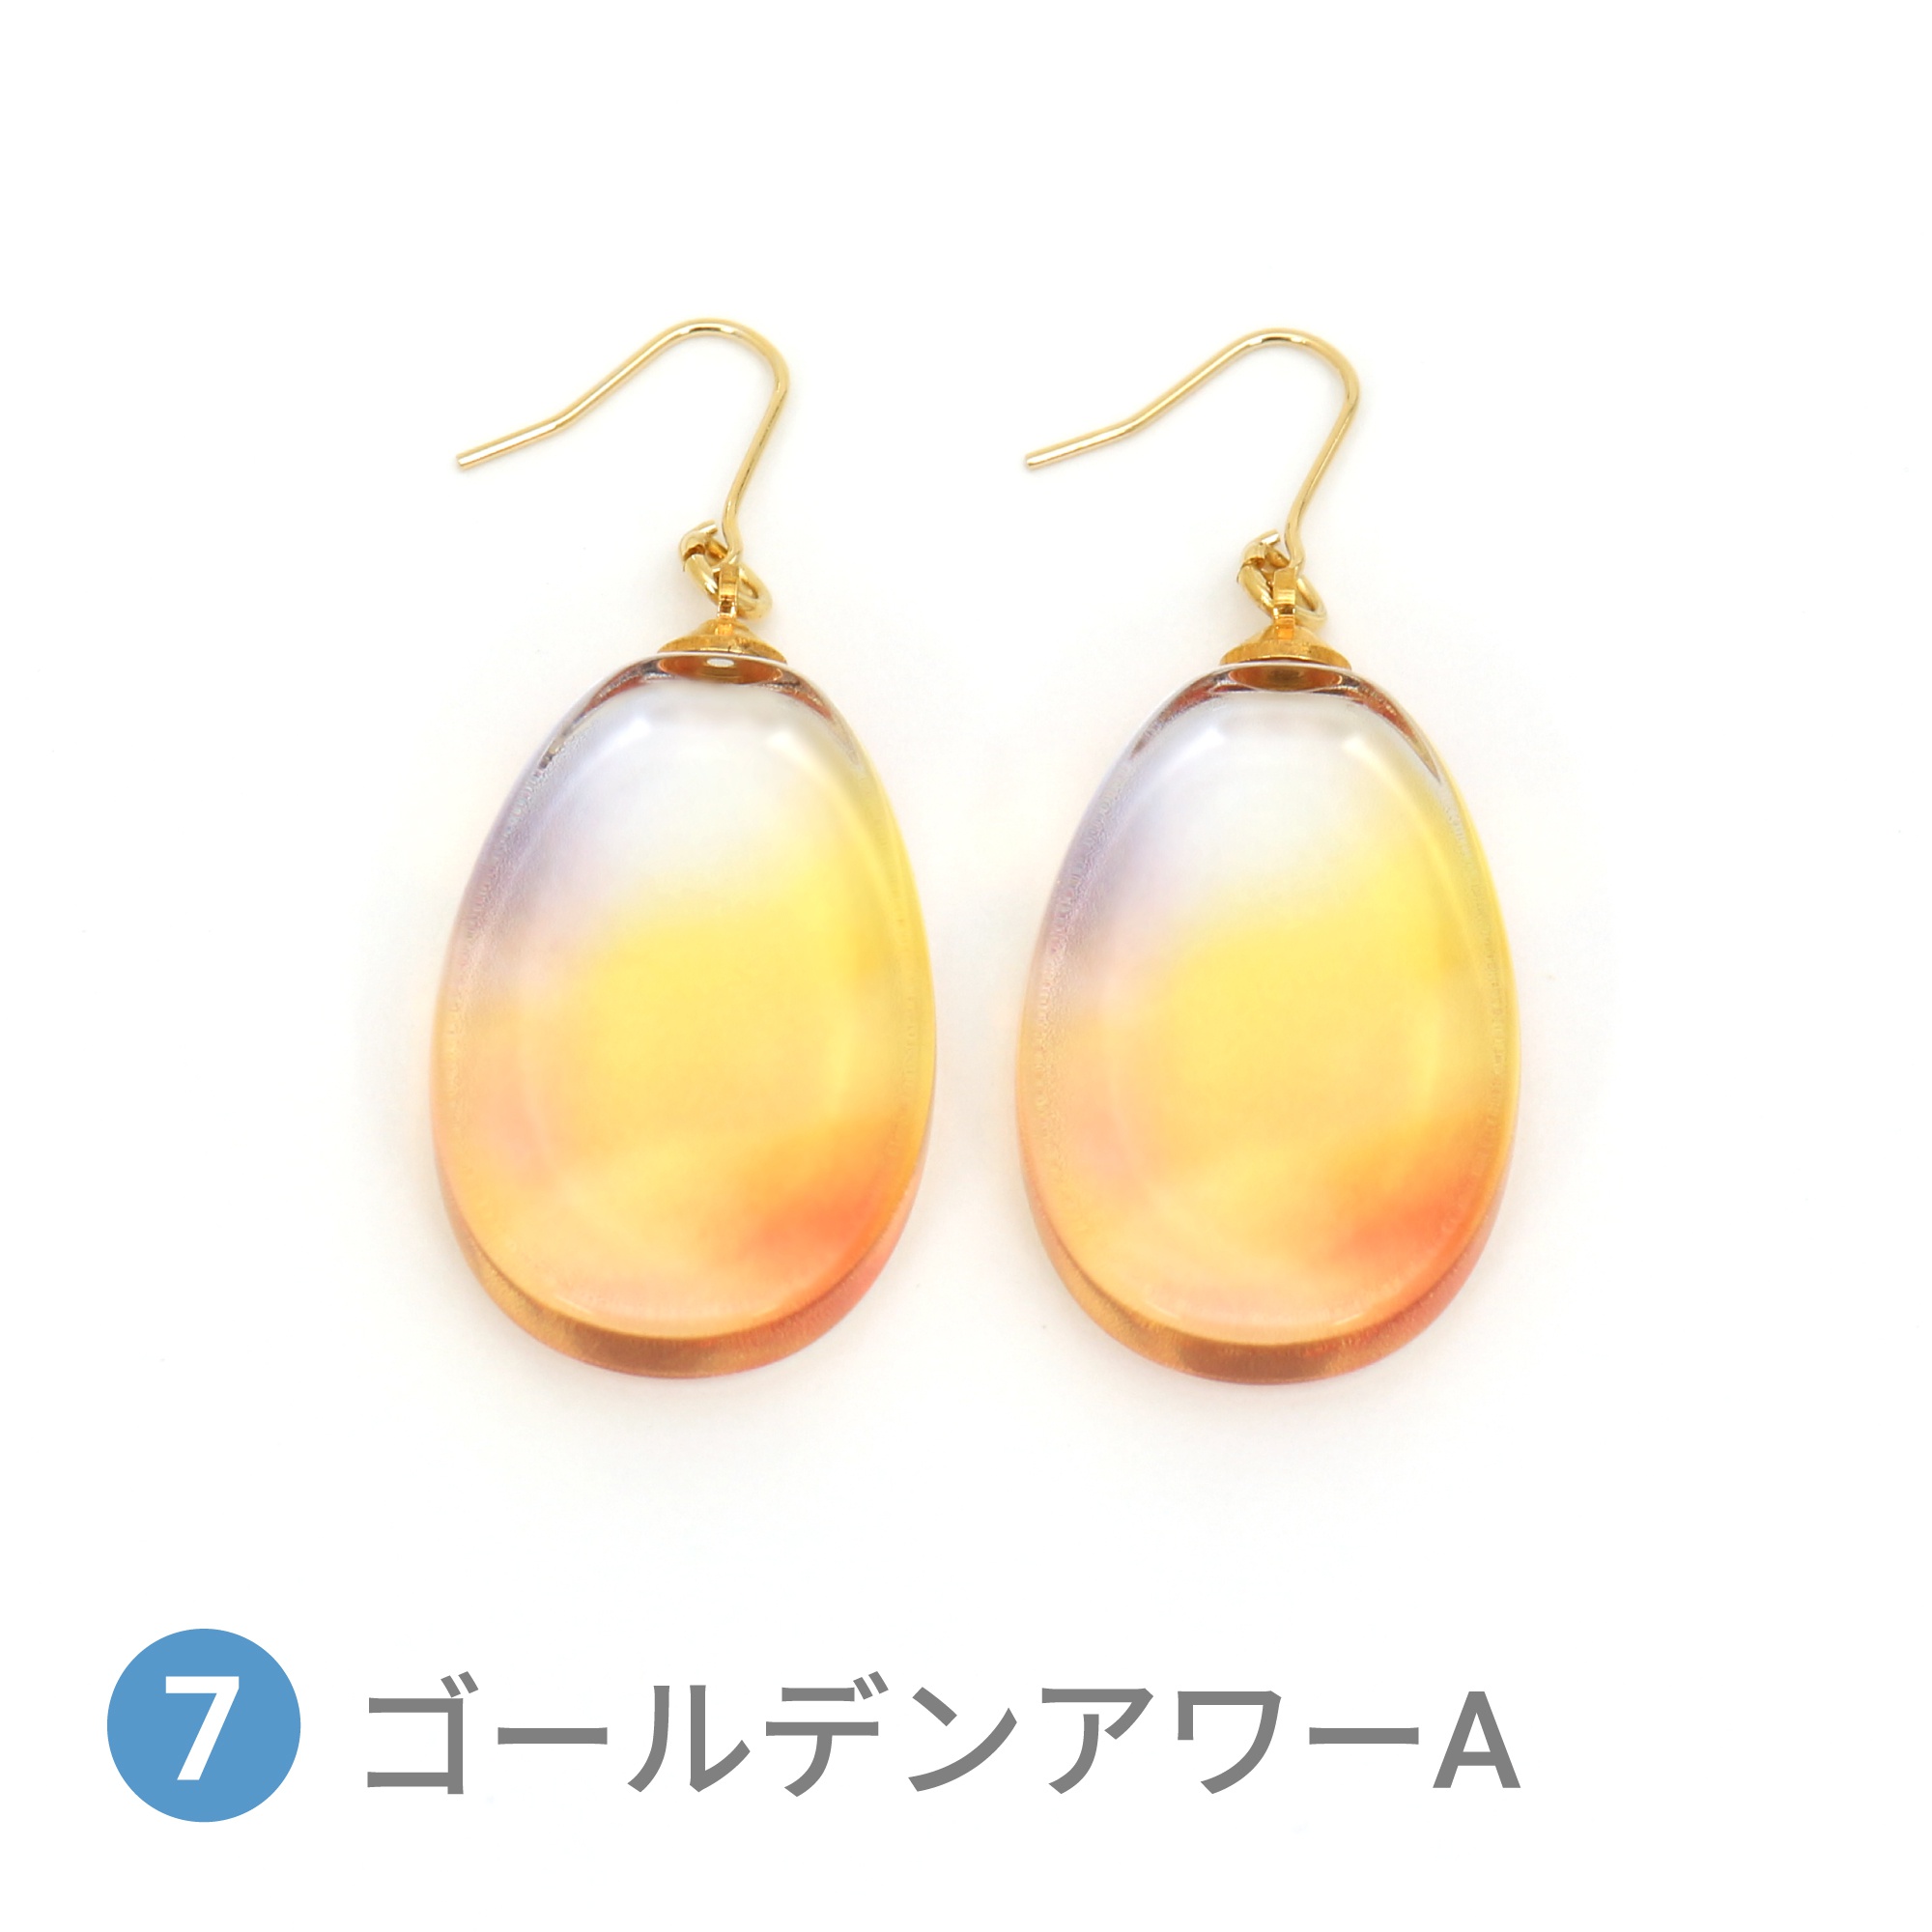 Glass accessories Pierced Earring SKY COLOR golden hour A drop shape